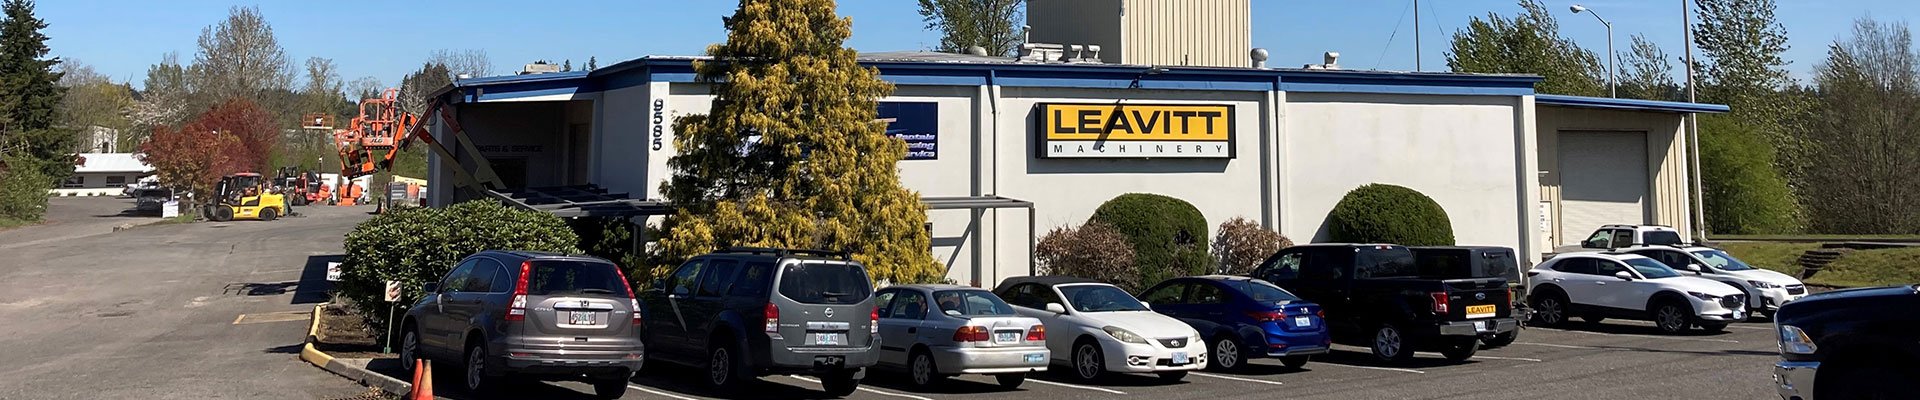 Leavitt Machinery Oregon branch